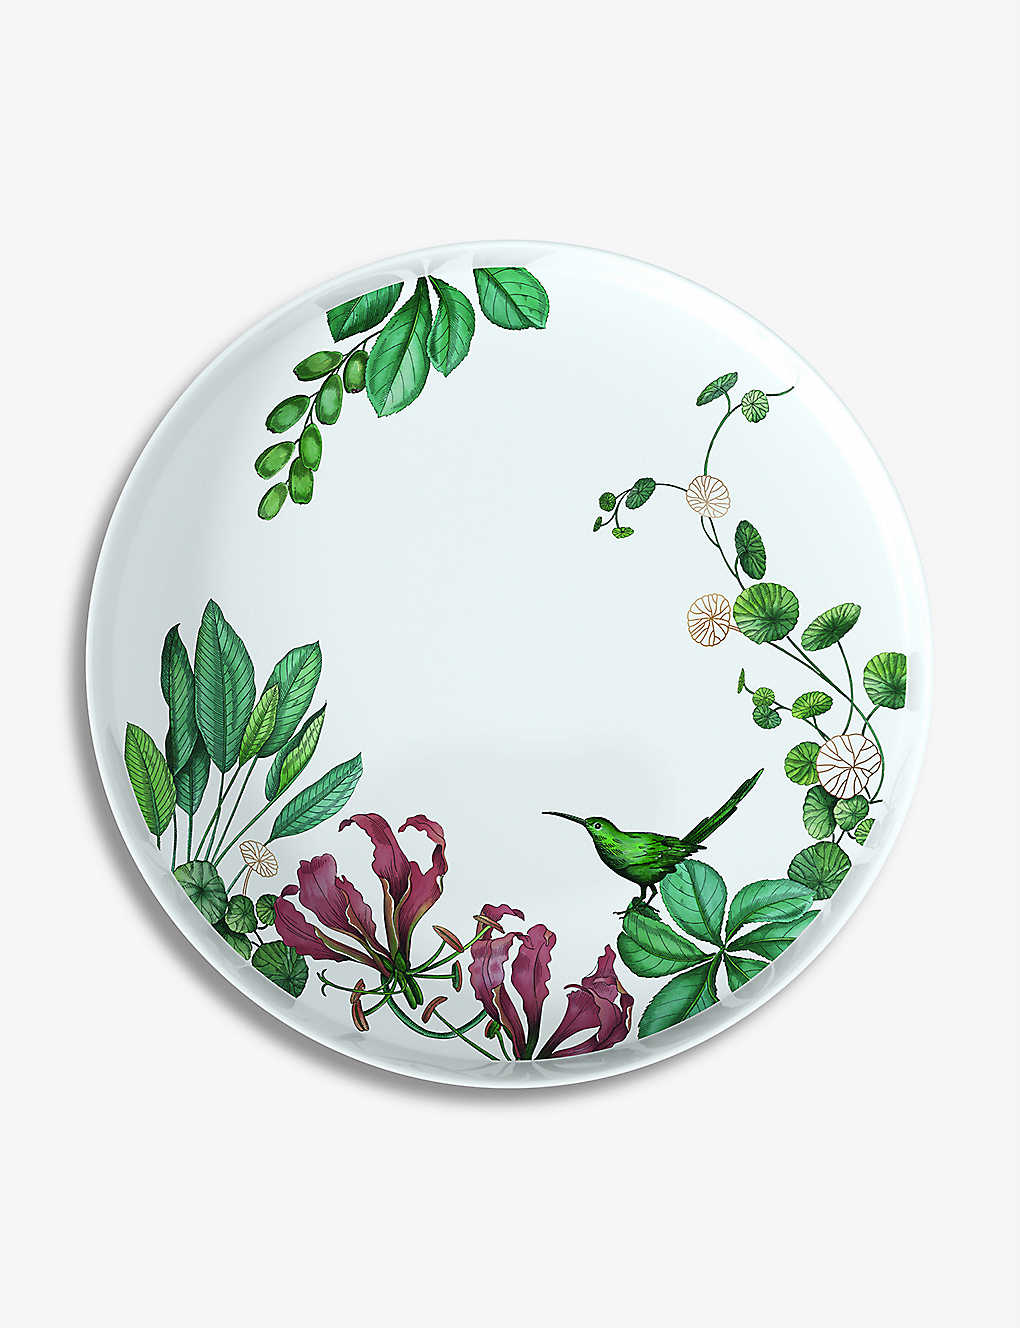 VILLEROY & BOCH アバルア フローラル ポーセレイン サービング ボウル 33cm Avarua floral porcelain serving bowl 33cm